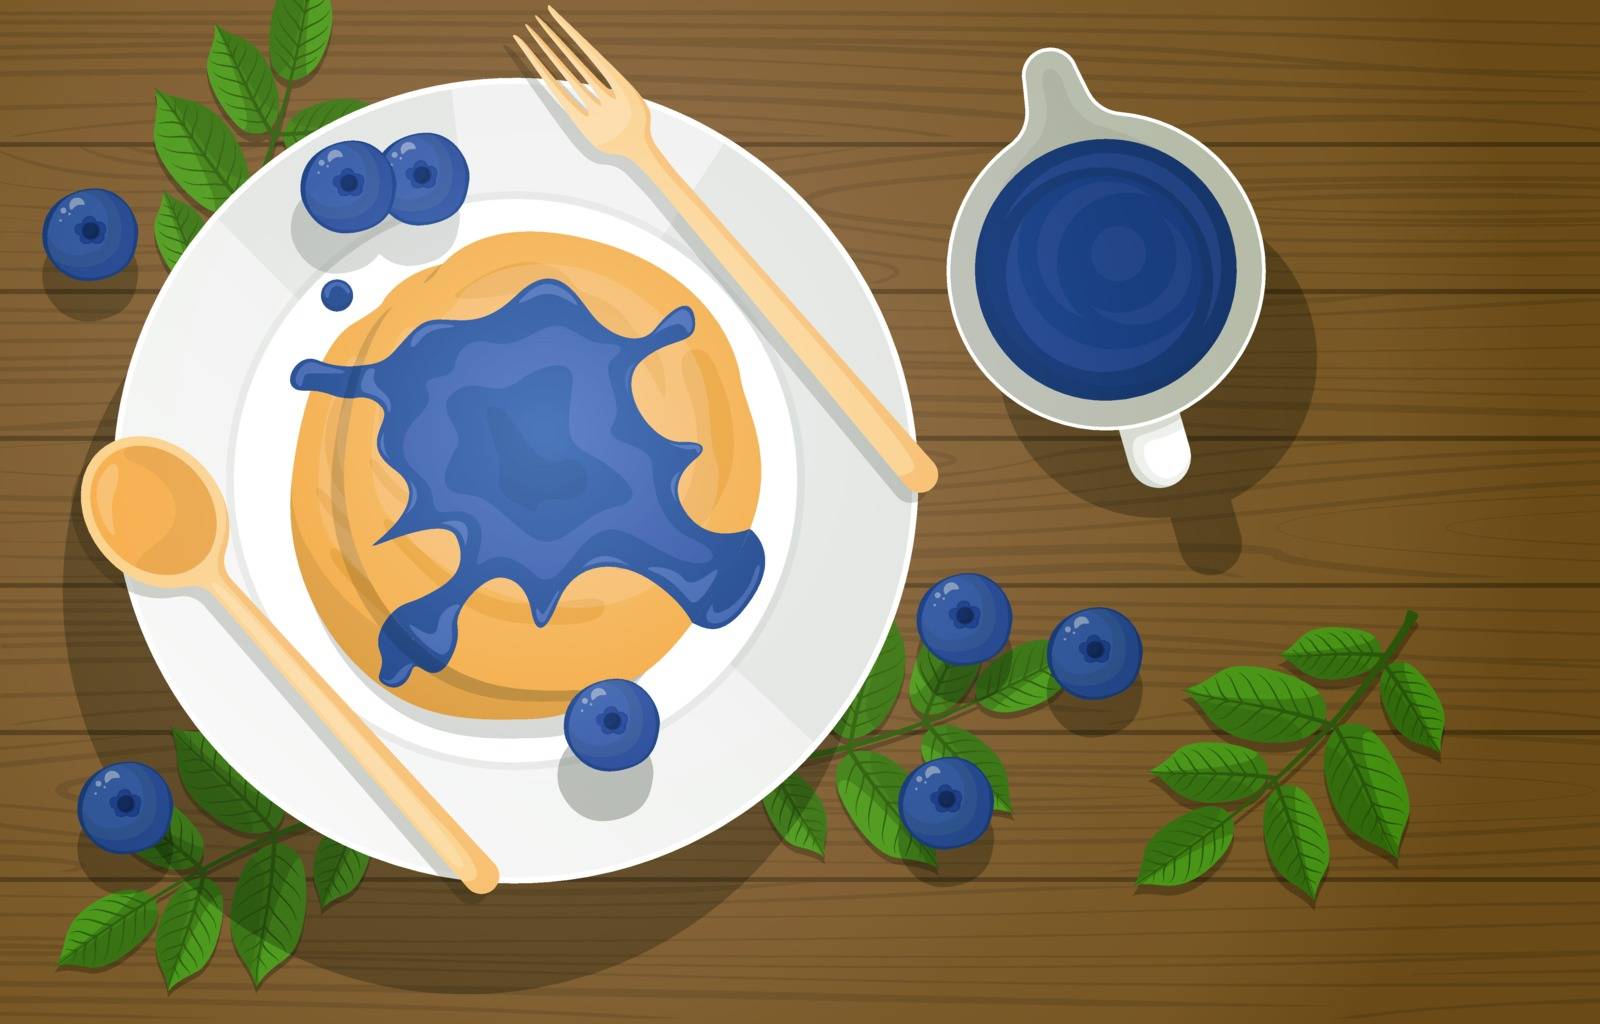 Pancake Blueberry Jam Syrup Food Photography Tasty Menu on Table by jongcreative